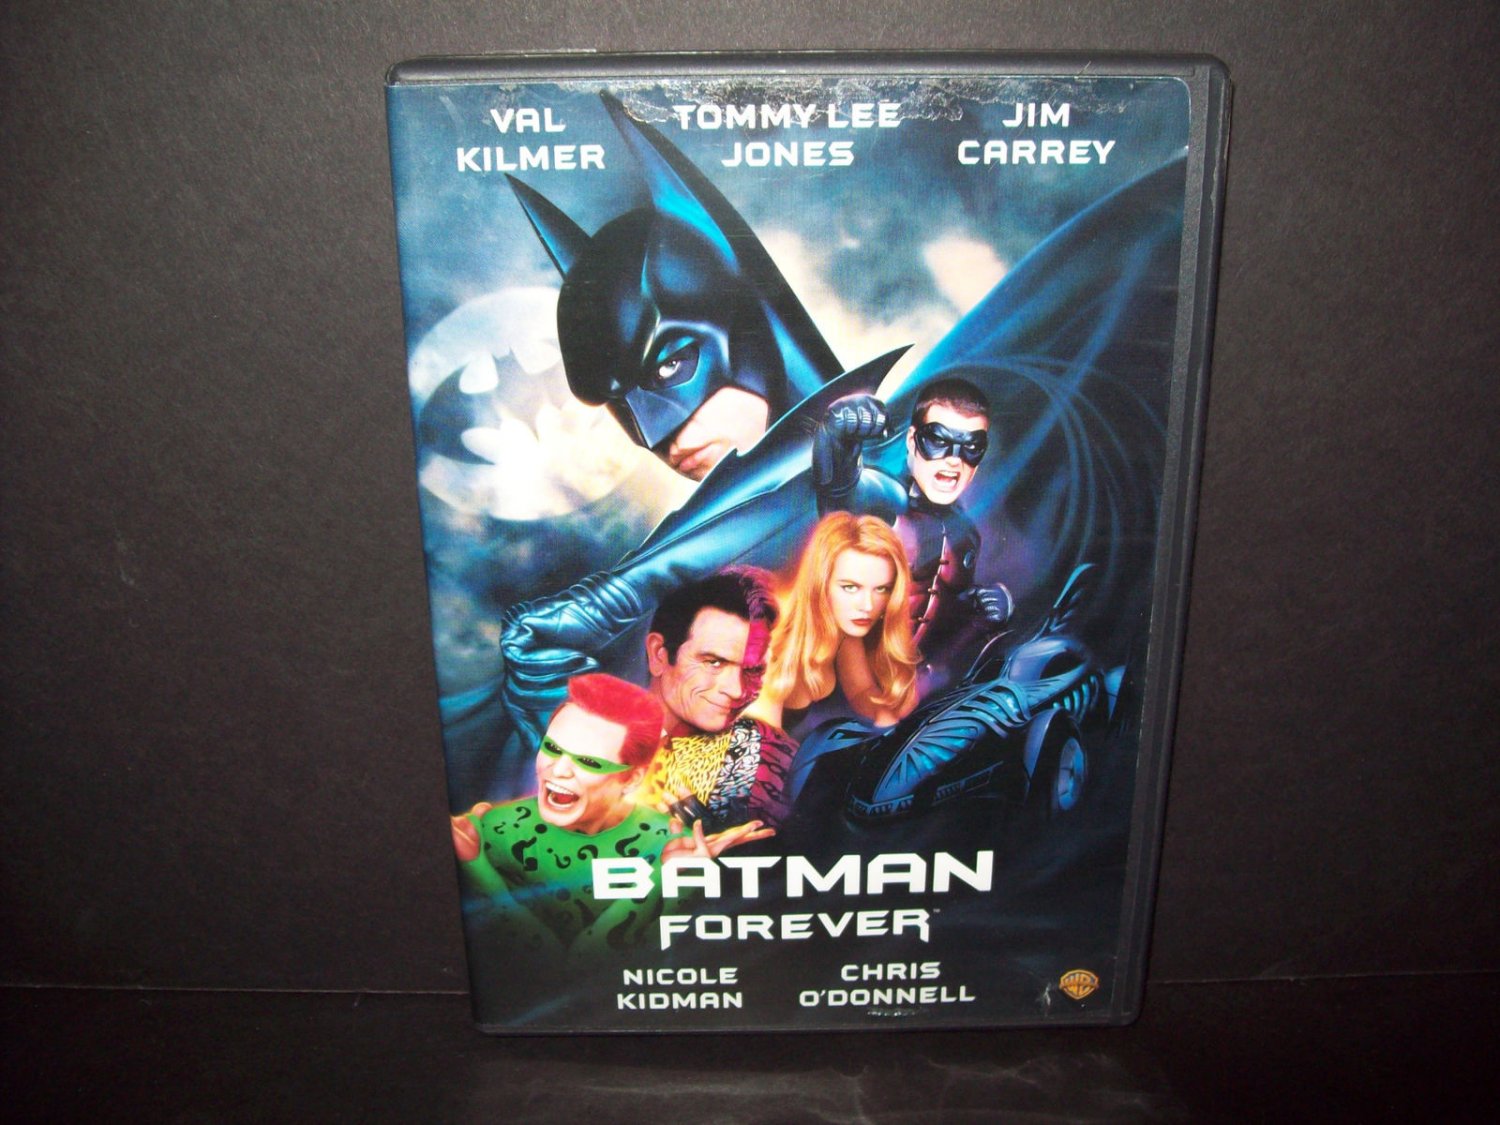 Batman Forever - DVD - Val Kilmer, Tommy Lee Jones, Jim Carrey, Nicole ...